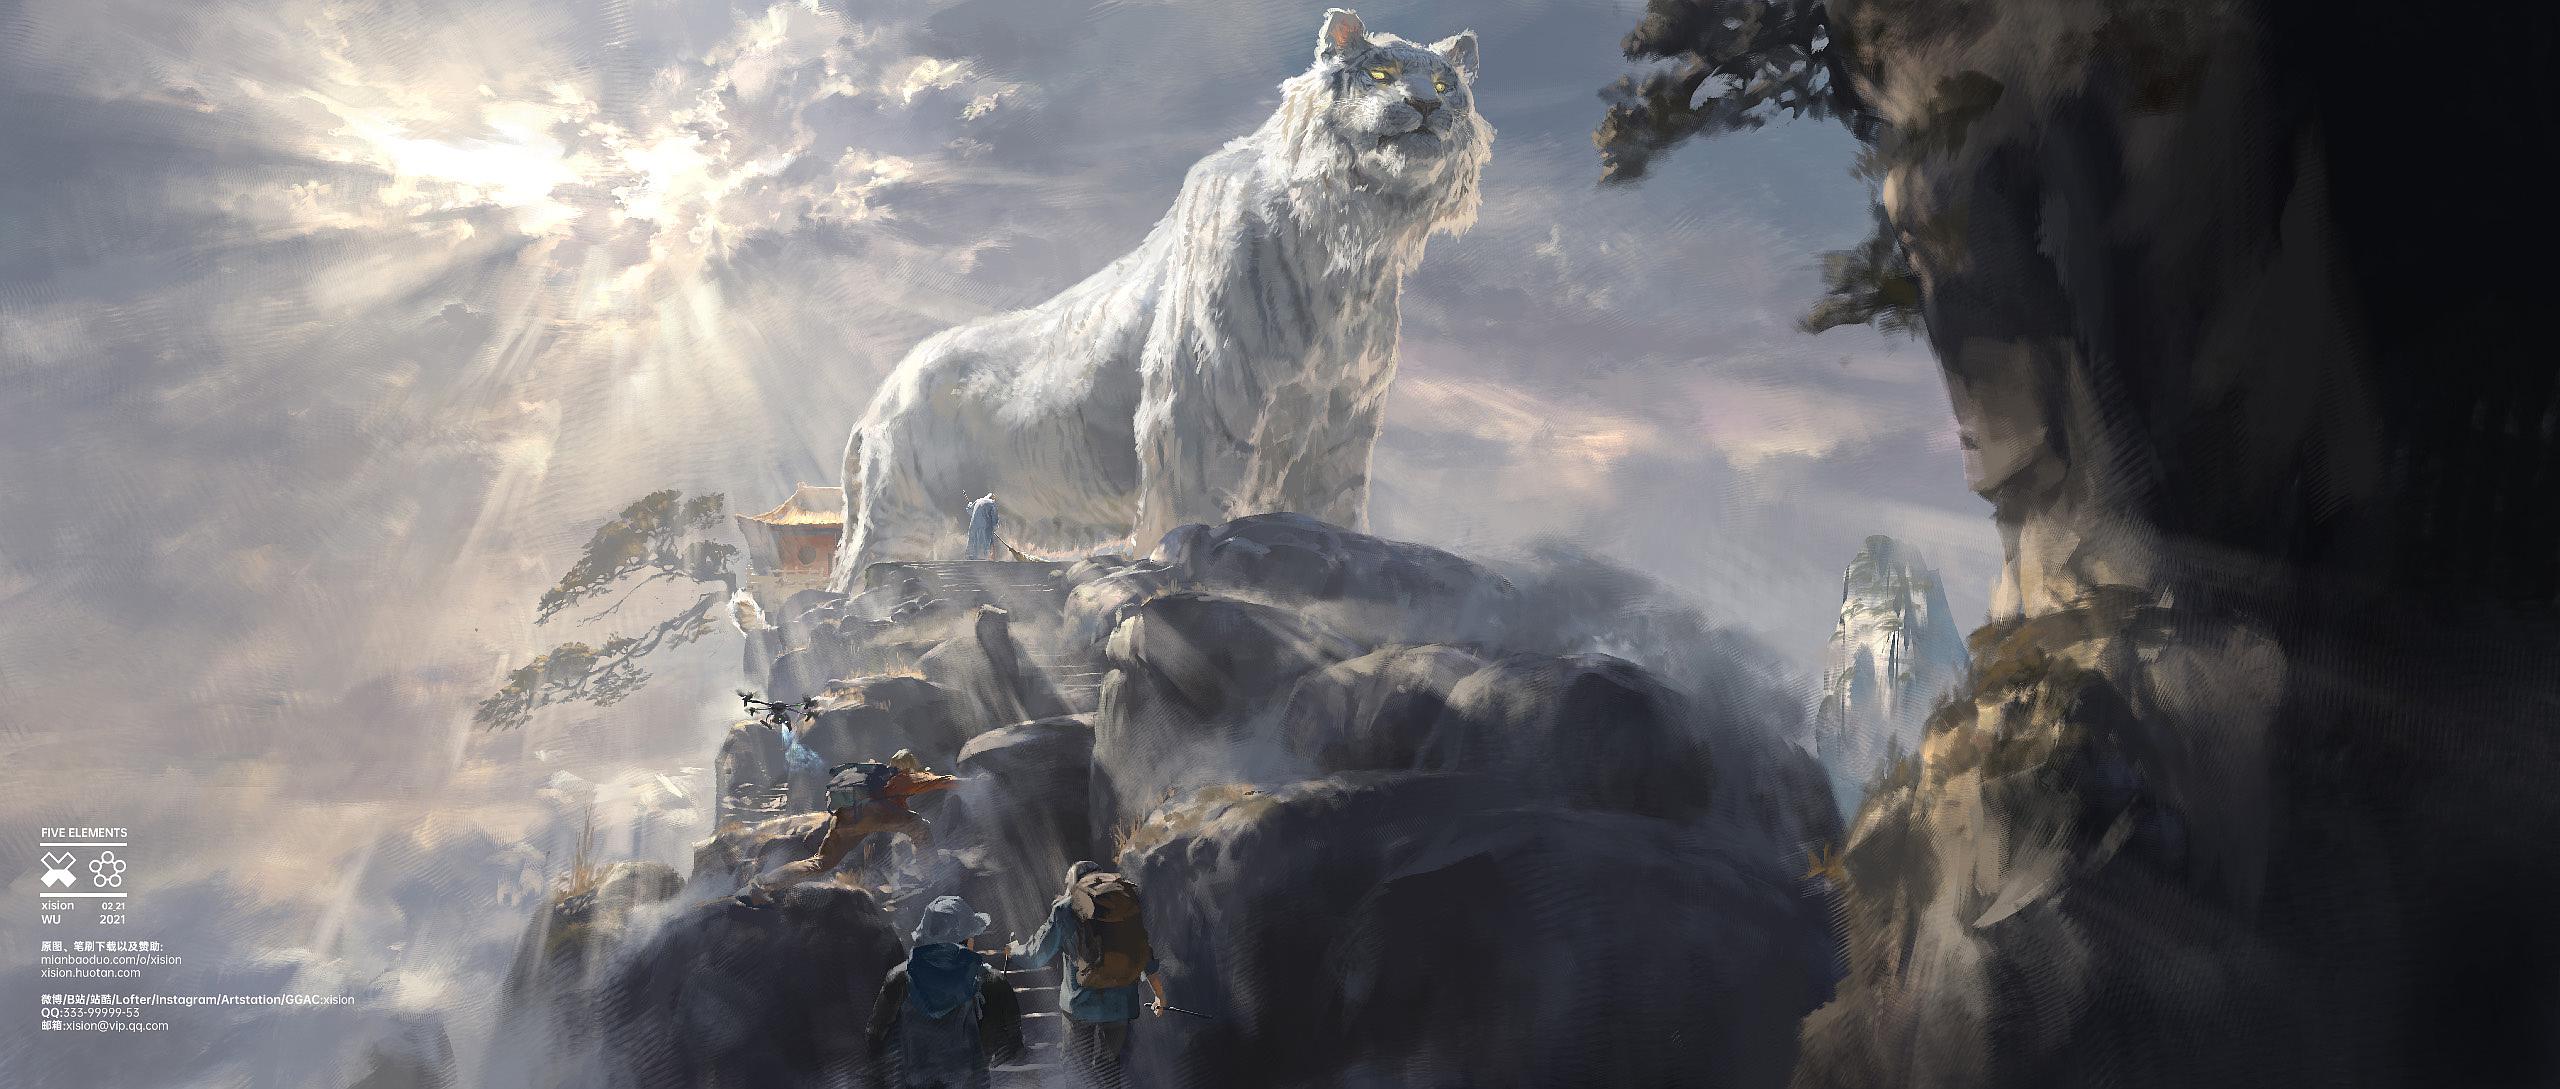 General 2560x1089 Xision Wu tiger fantasy art creature artwork sky sunlight landscape